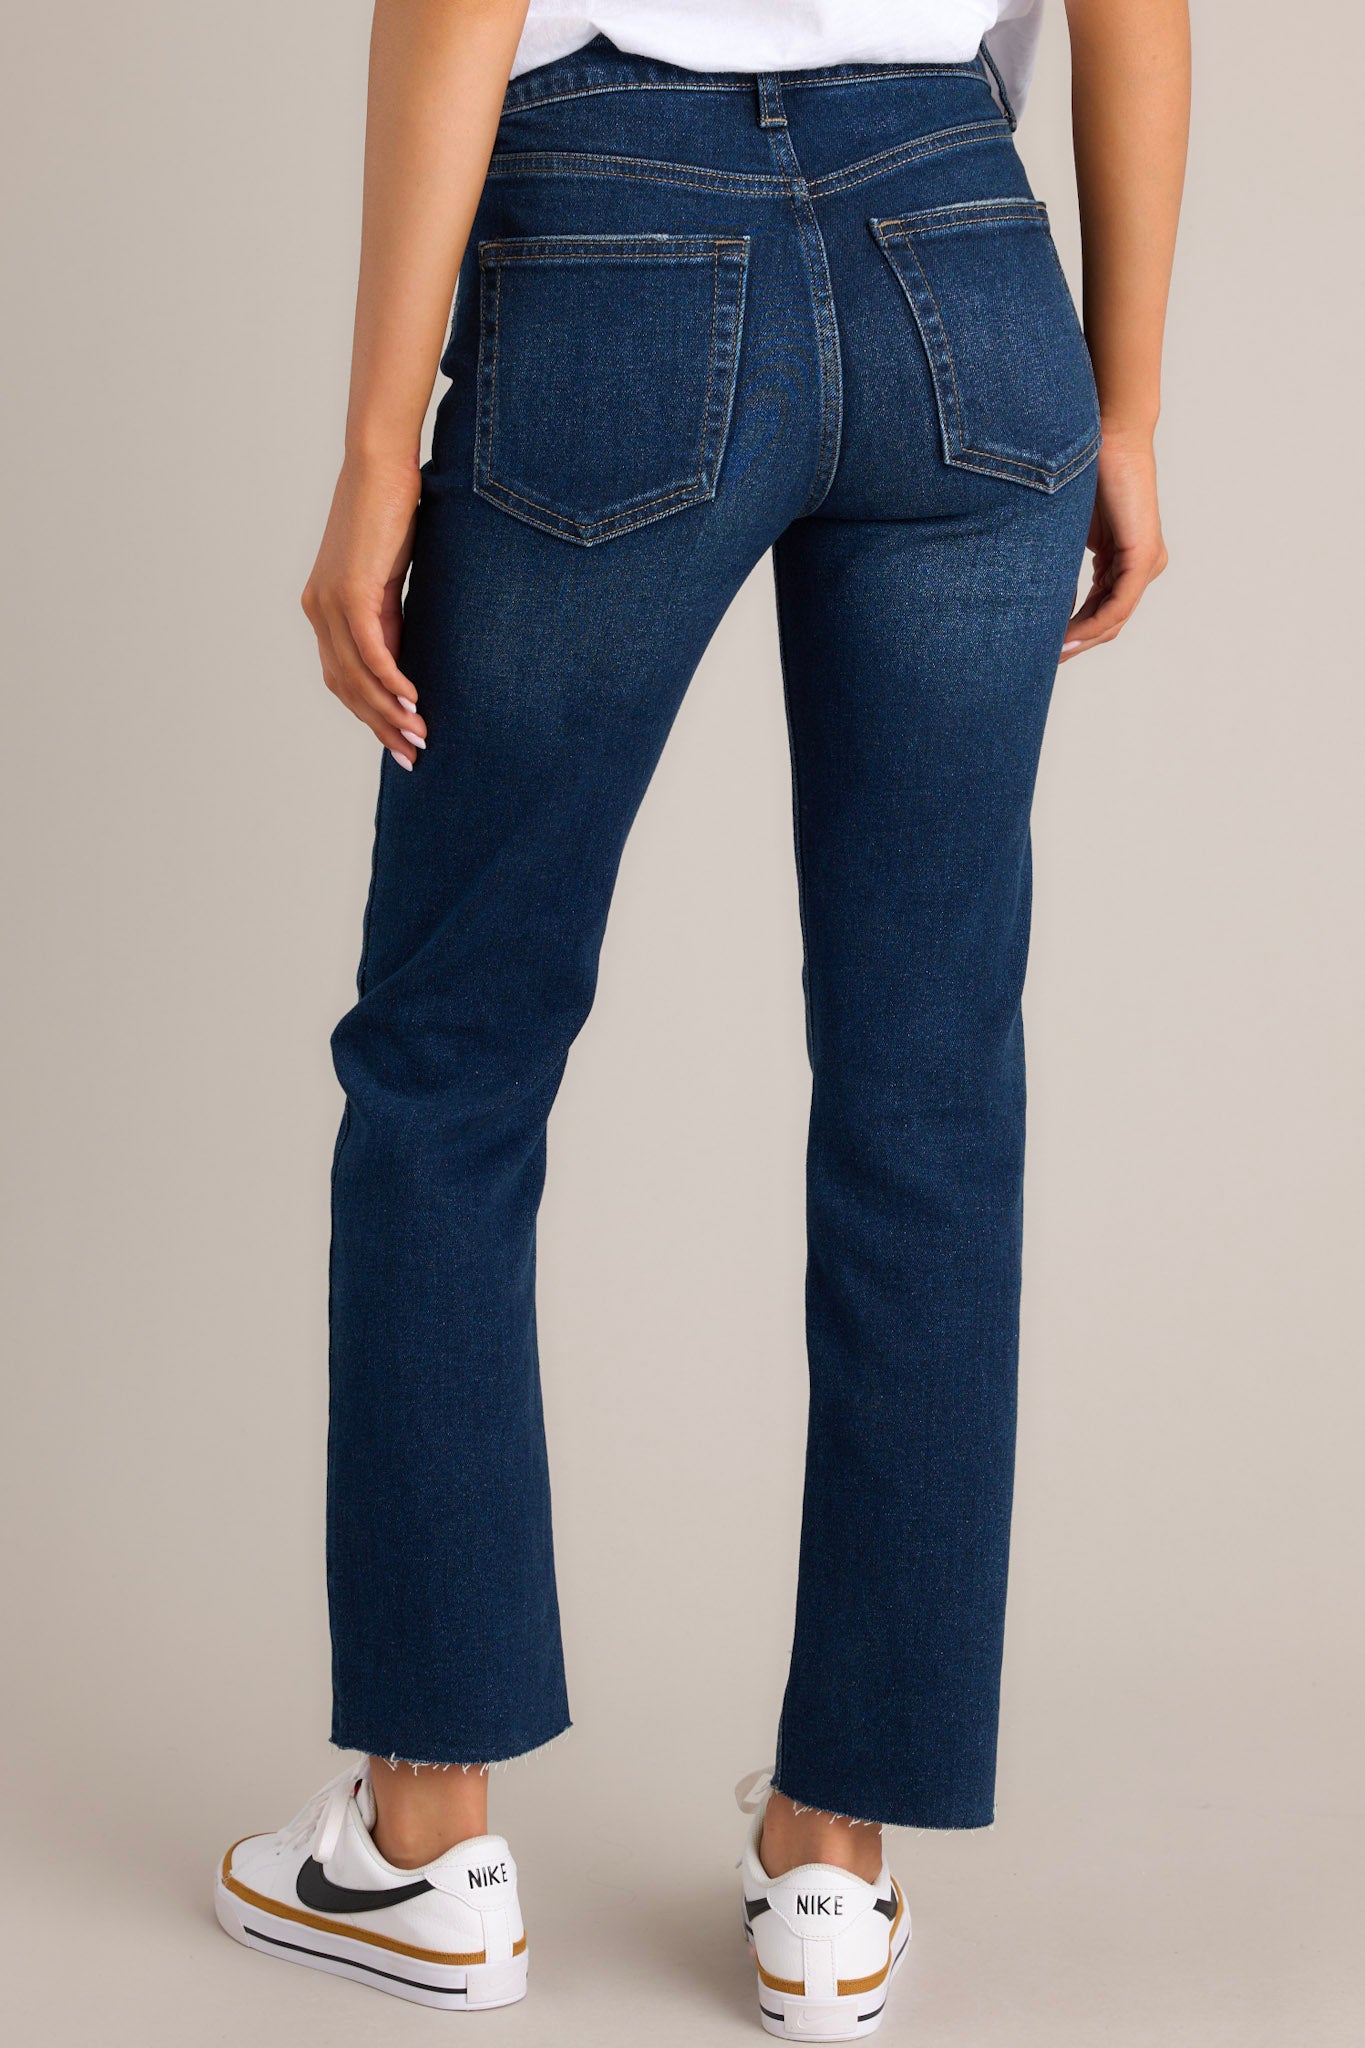 Back view of dark wash denim jeans highlighting the high-rise waist, functional back pockets, belt loops, and scissor cut-off hem.